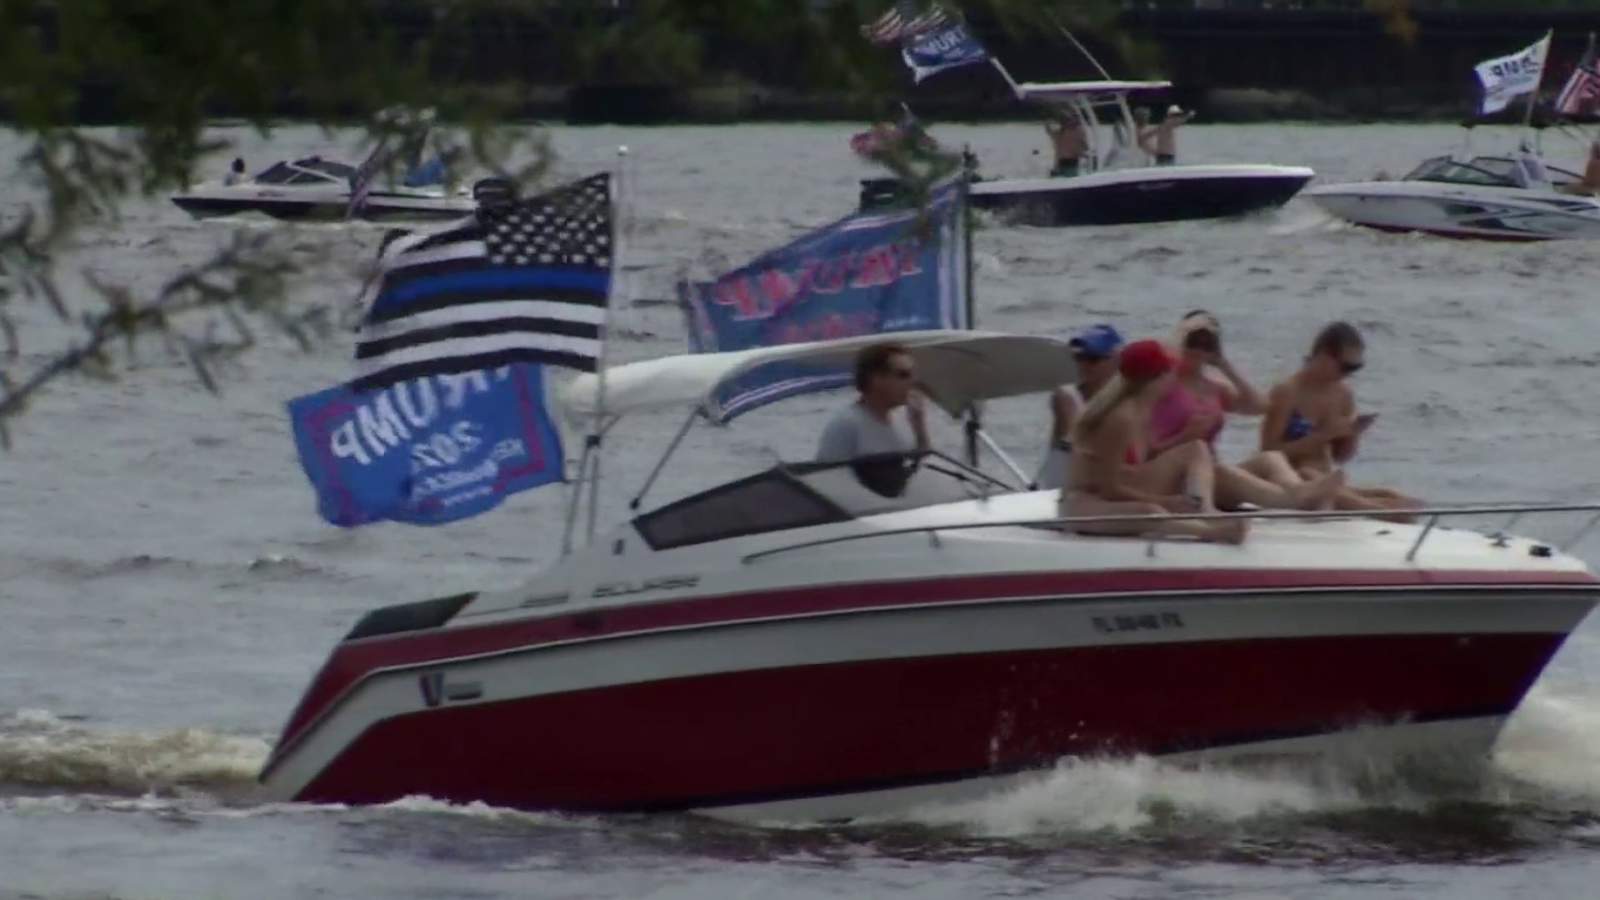 Trump 2020 boat parade celebrates Republican National Convention